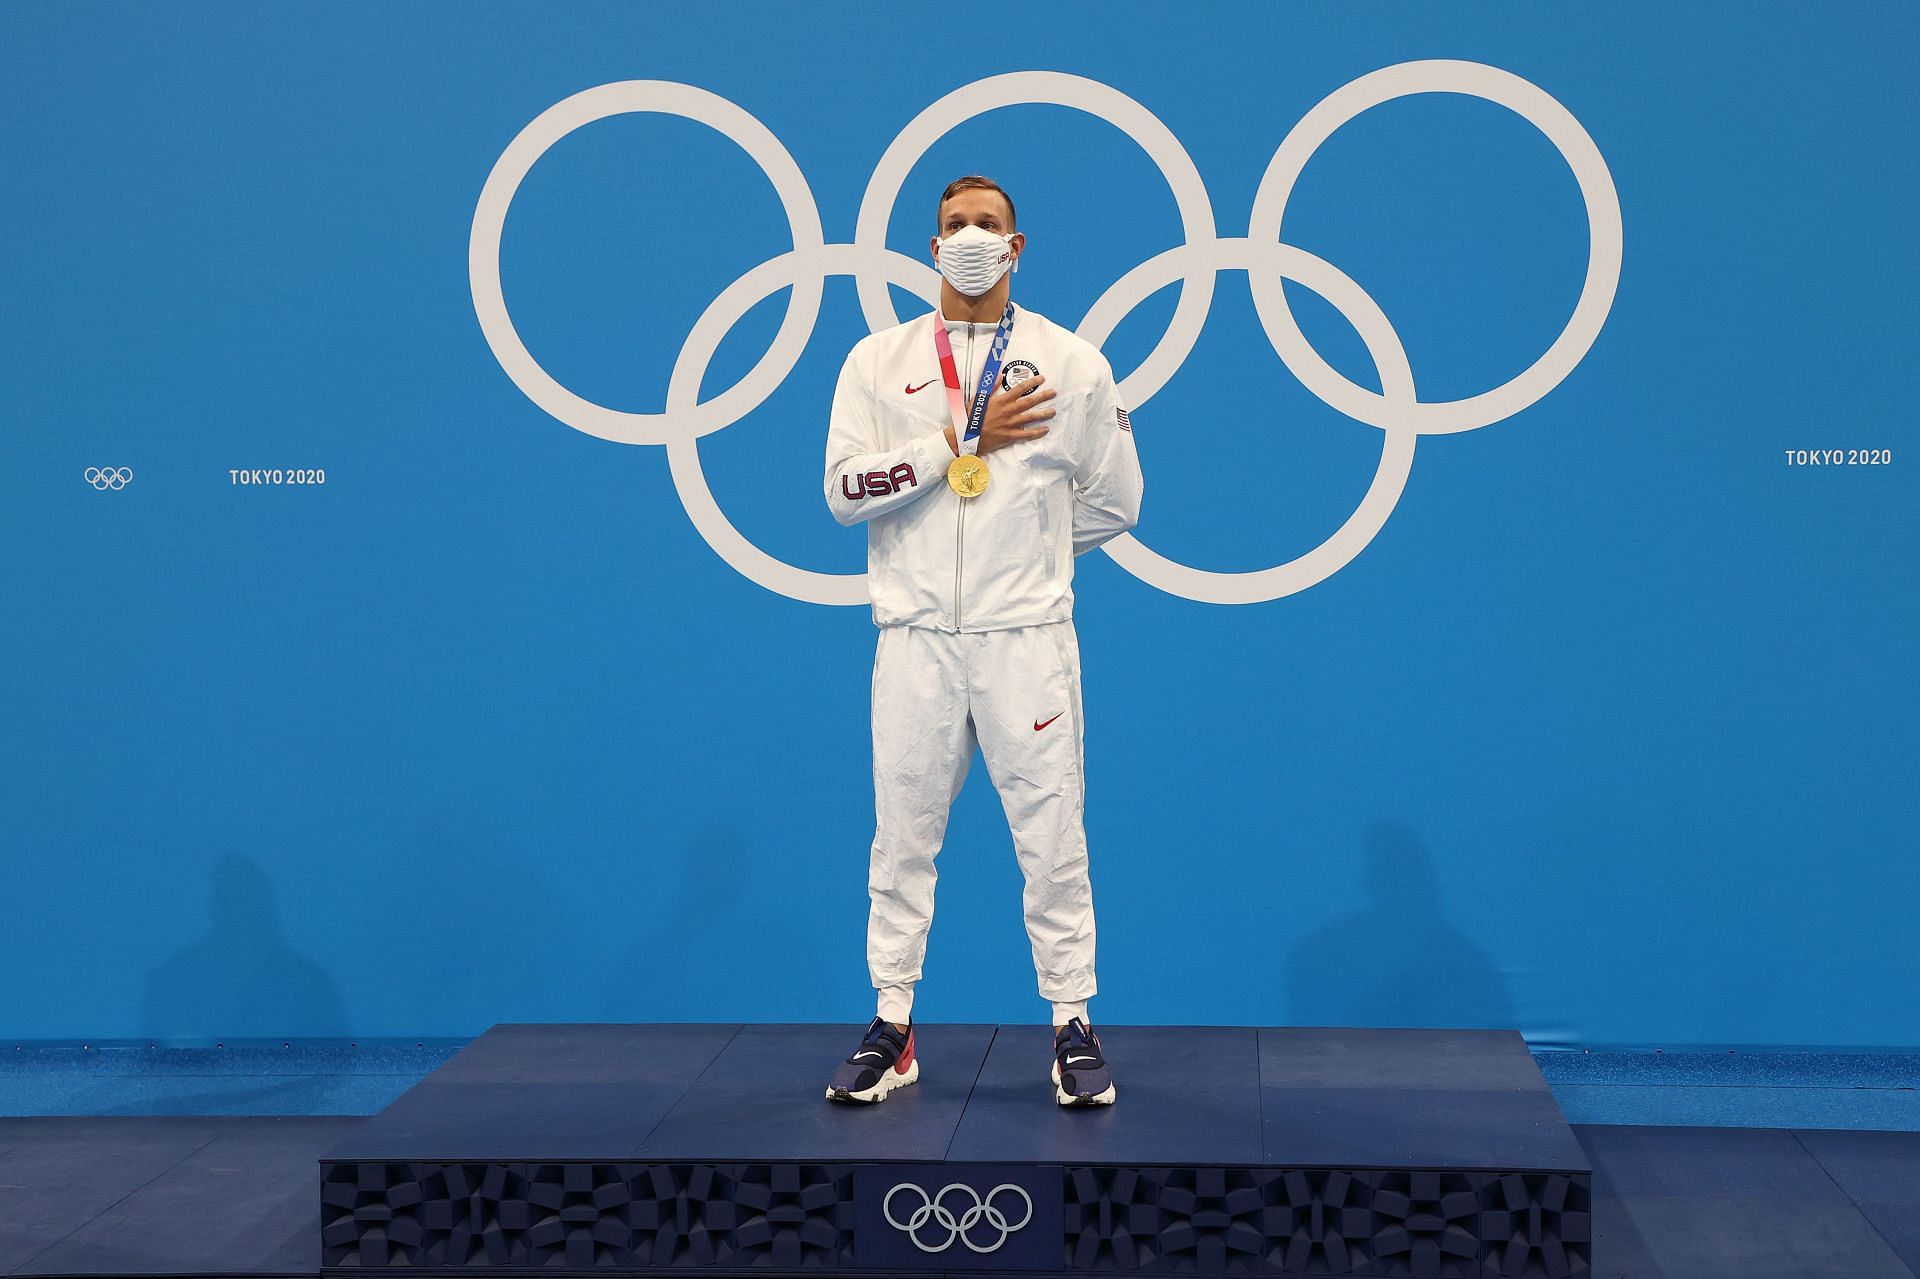 Caeleb Dressel at the Tokyo Olympics 2020